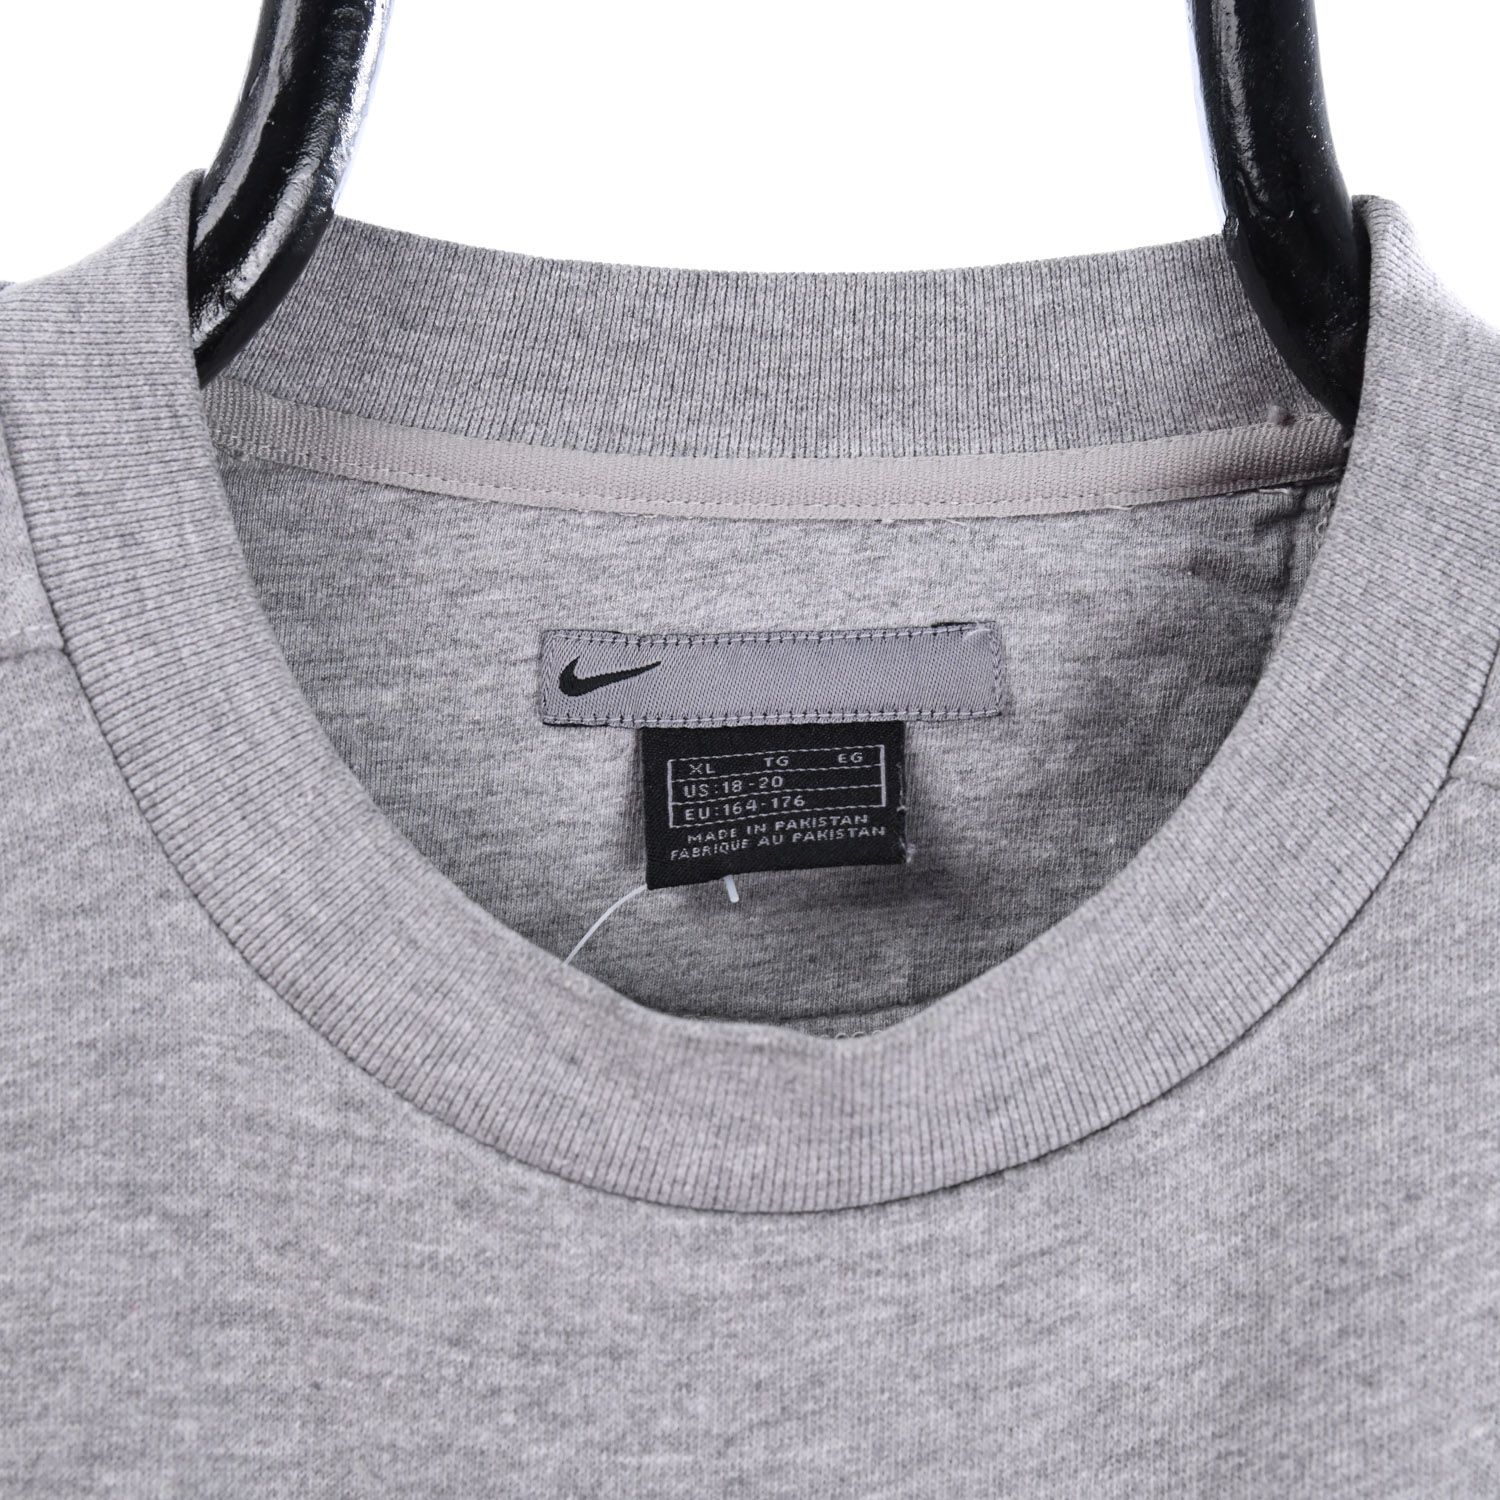 Nike Early 2000s Grey Sweatshirt With Embroidered Logo 